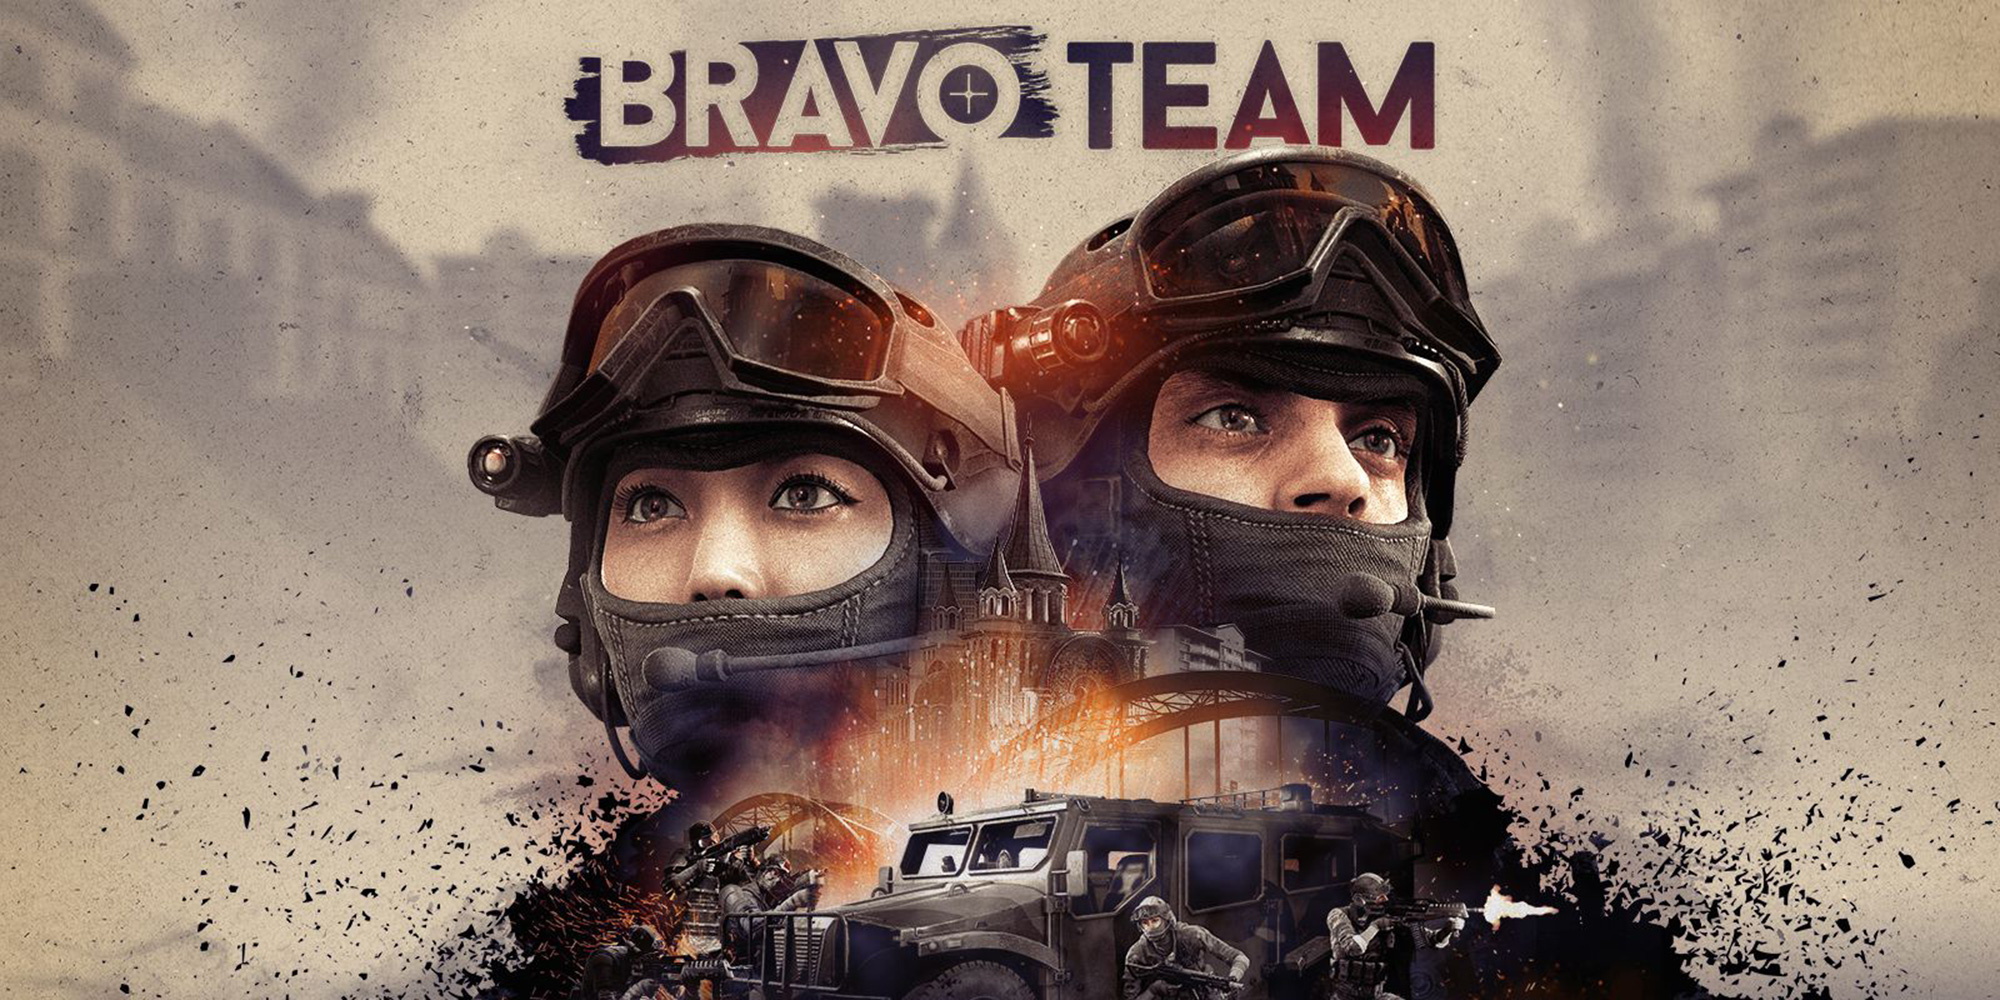  Bravo Team